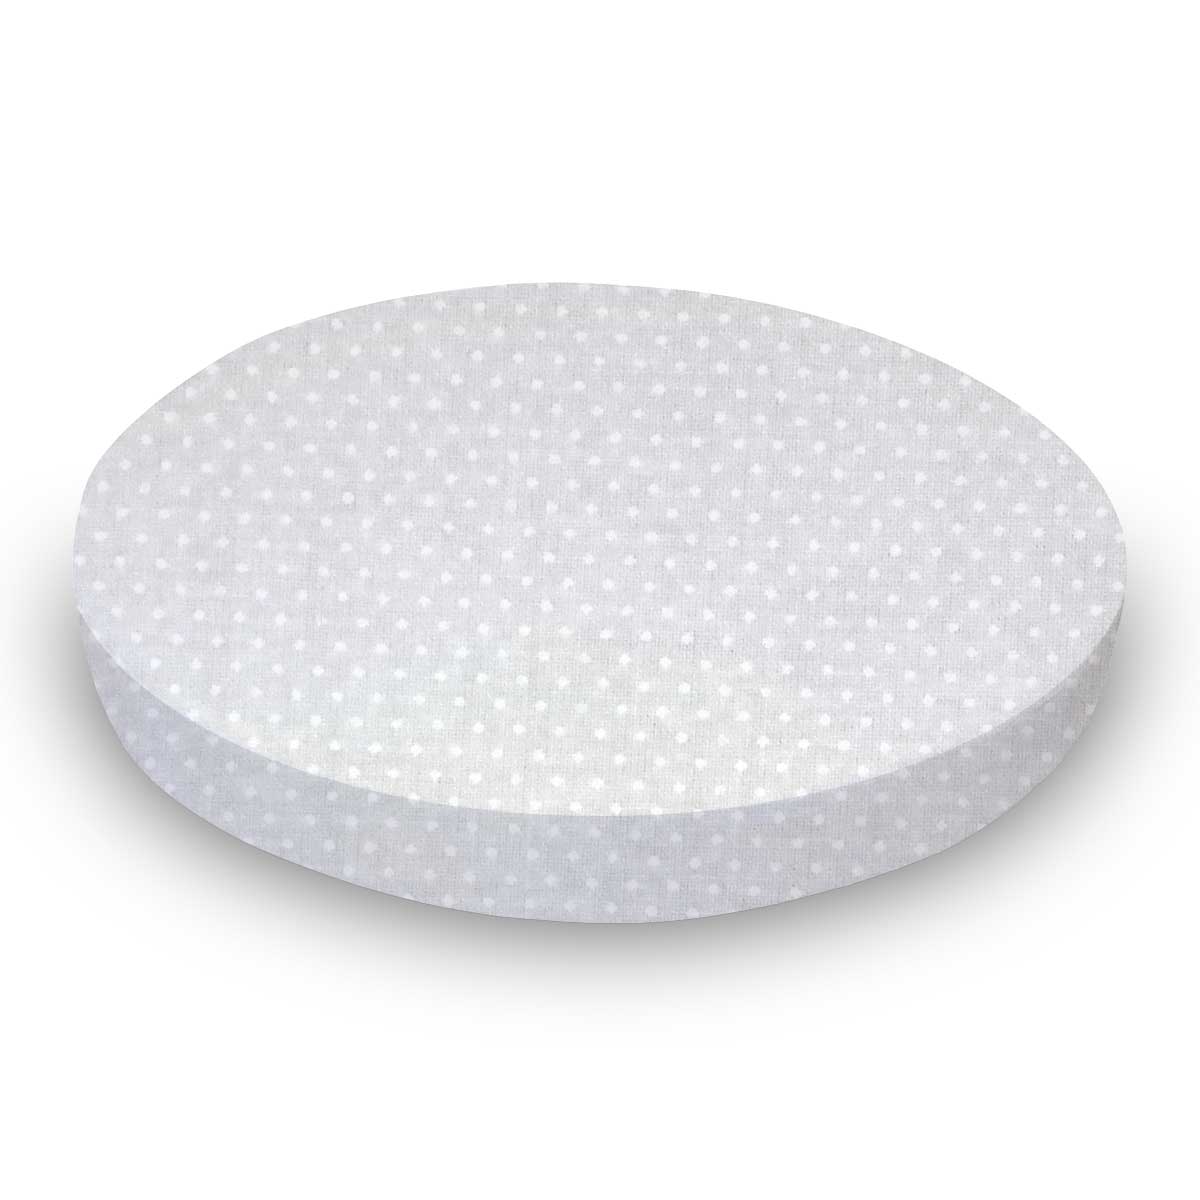 Round Crib - White On White Pindots - 42`` Fitted